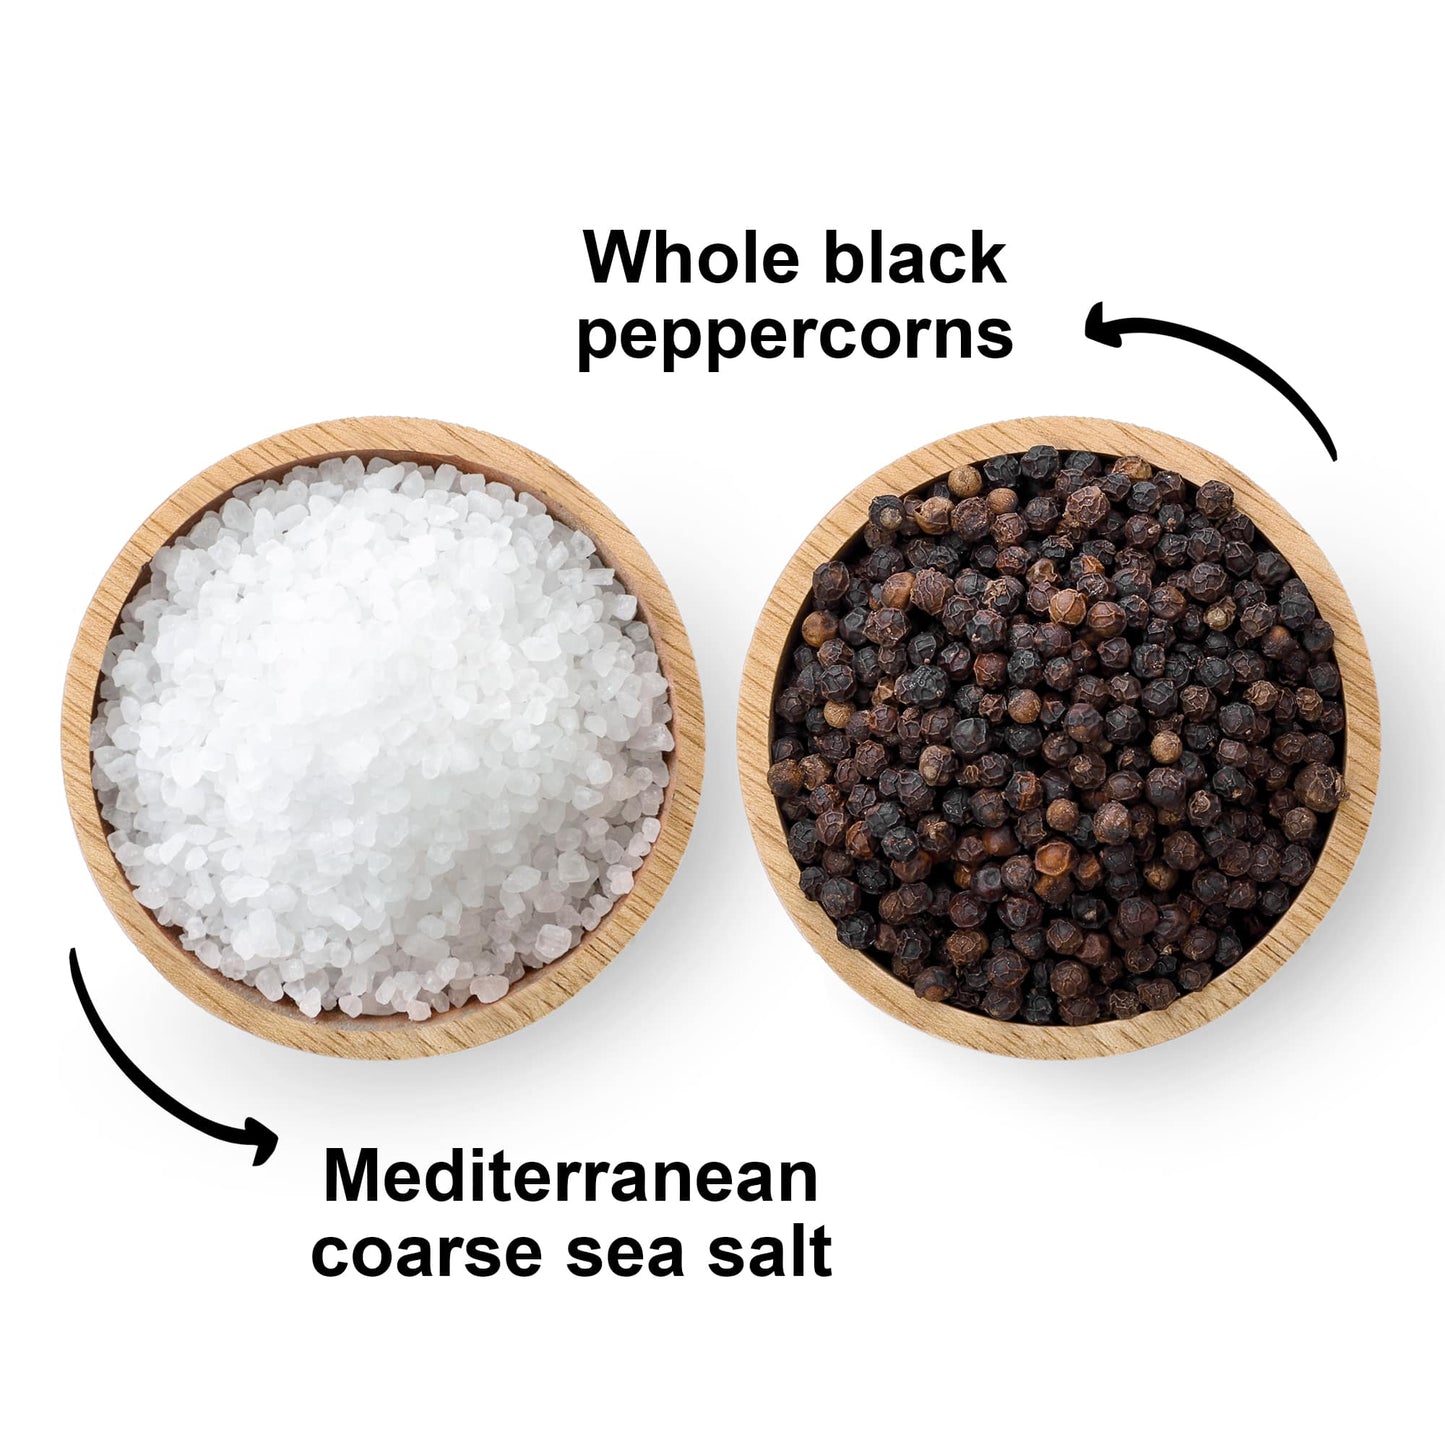 Gourmet Sea Salt and Pepper Set – Mediterranean Coarse Sea Salt (2 LB) and Whole Black Peppercorns (1 LB). Culinary Essentials for Flavorful Delights!